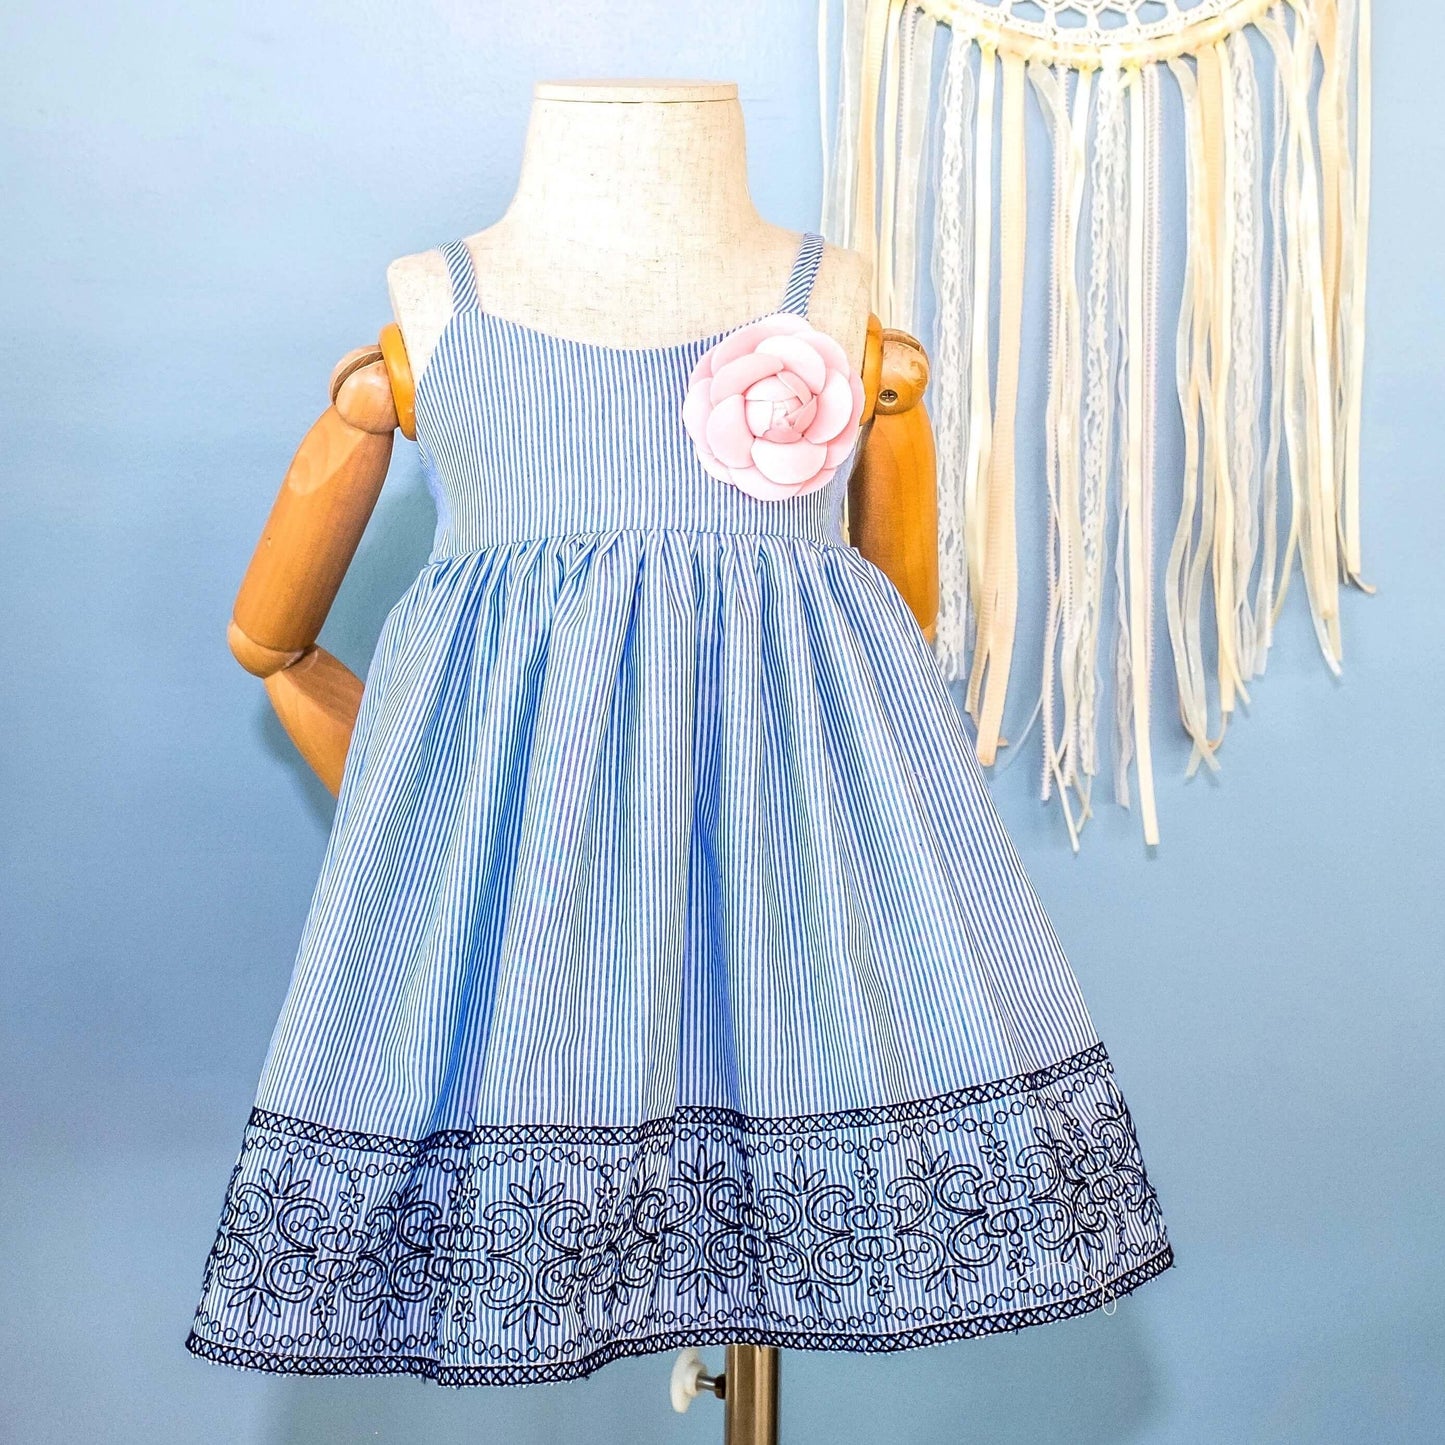 Dahlia Dress in Blue Stripes Panel Embroidery - Lil' Tati